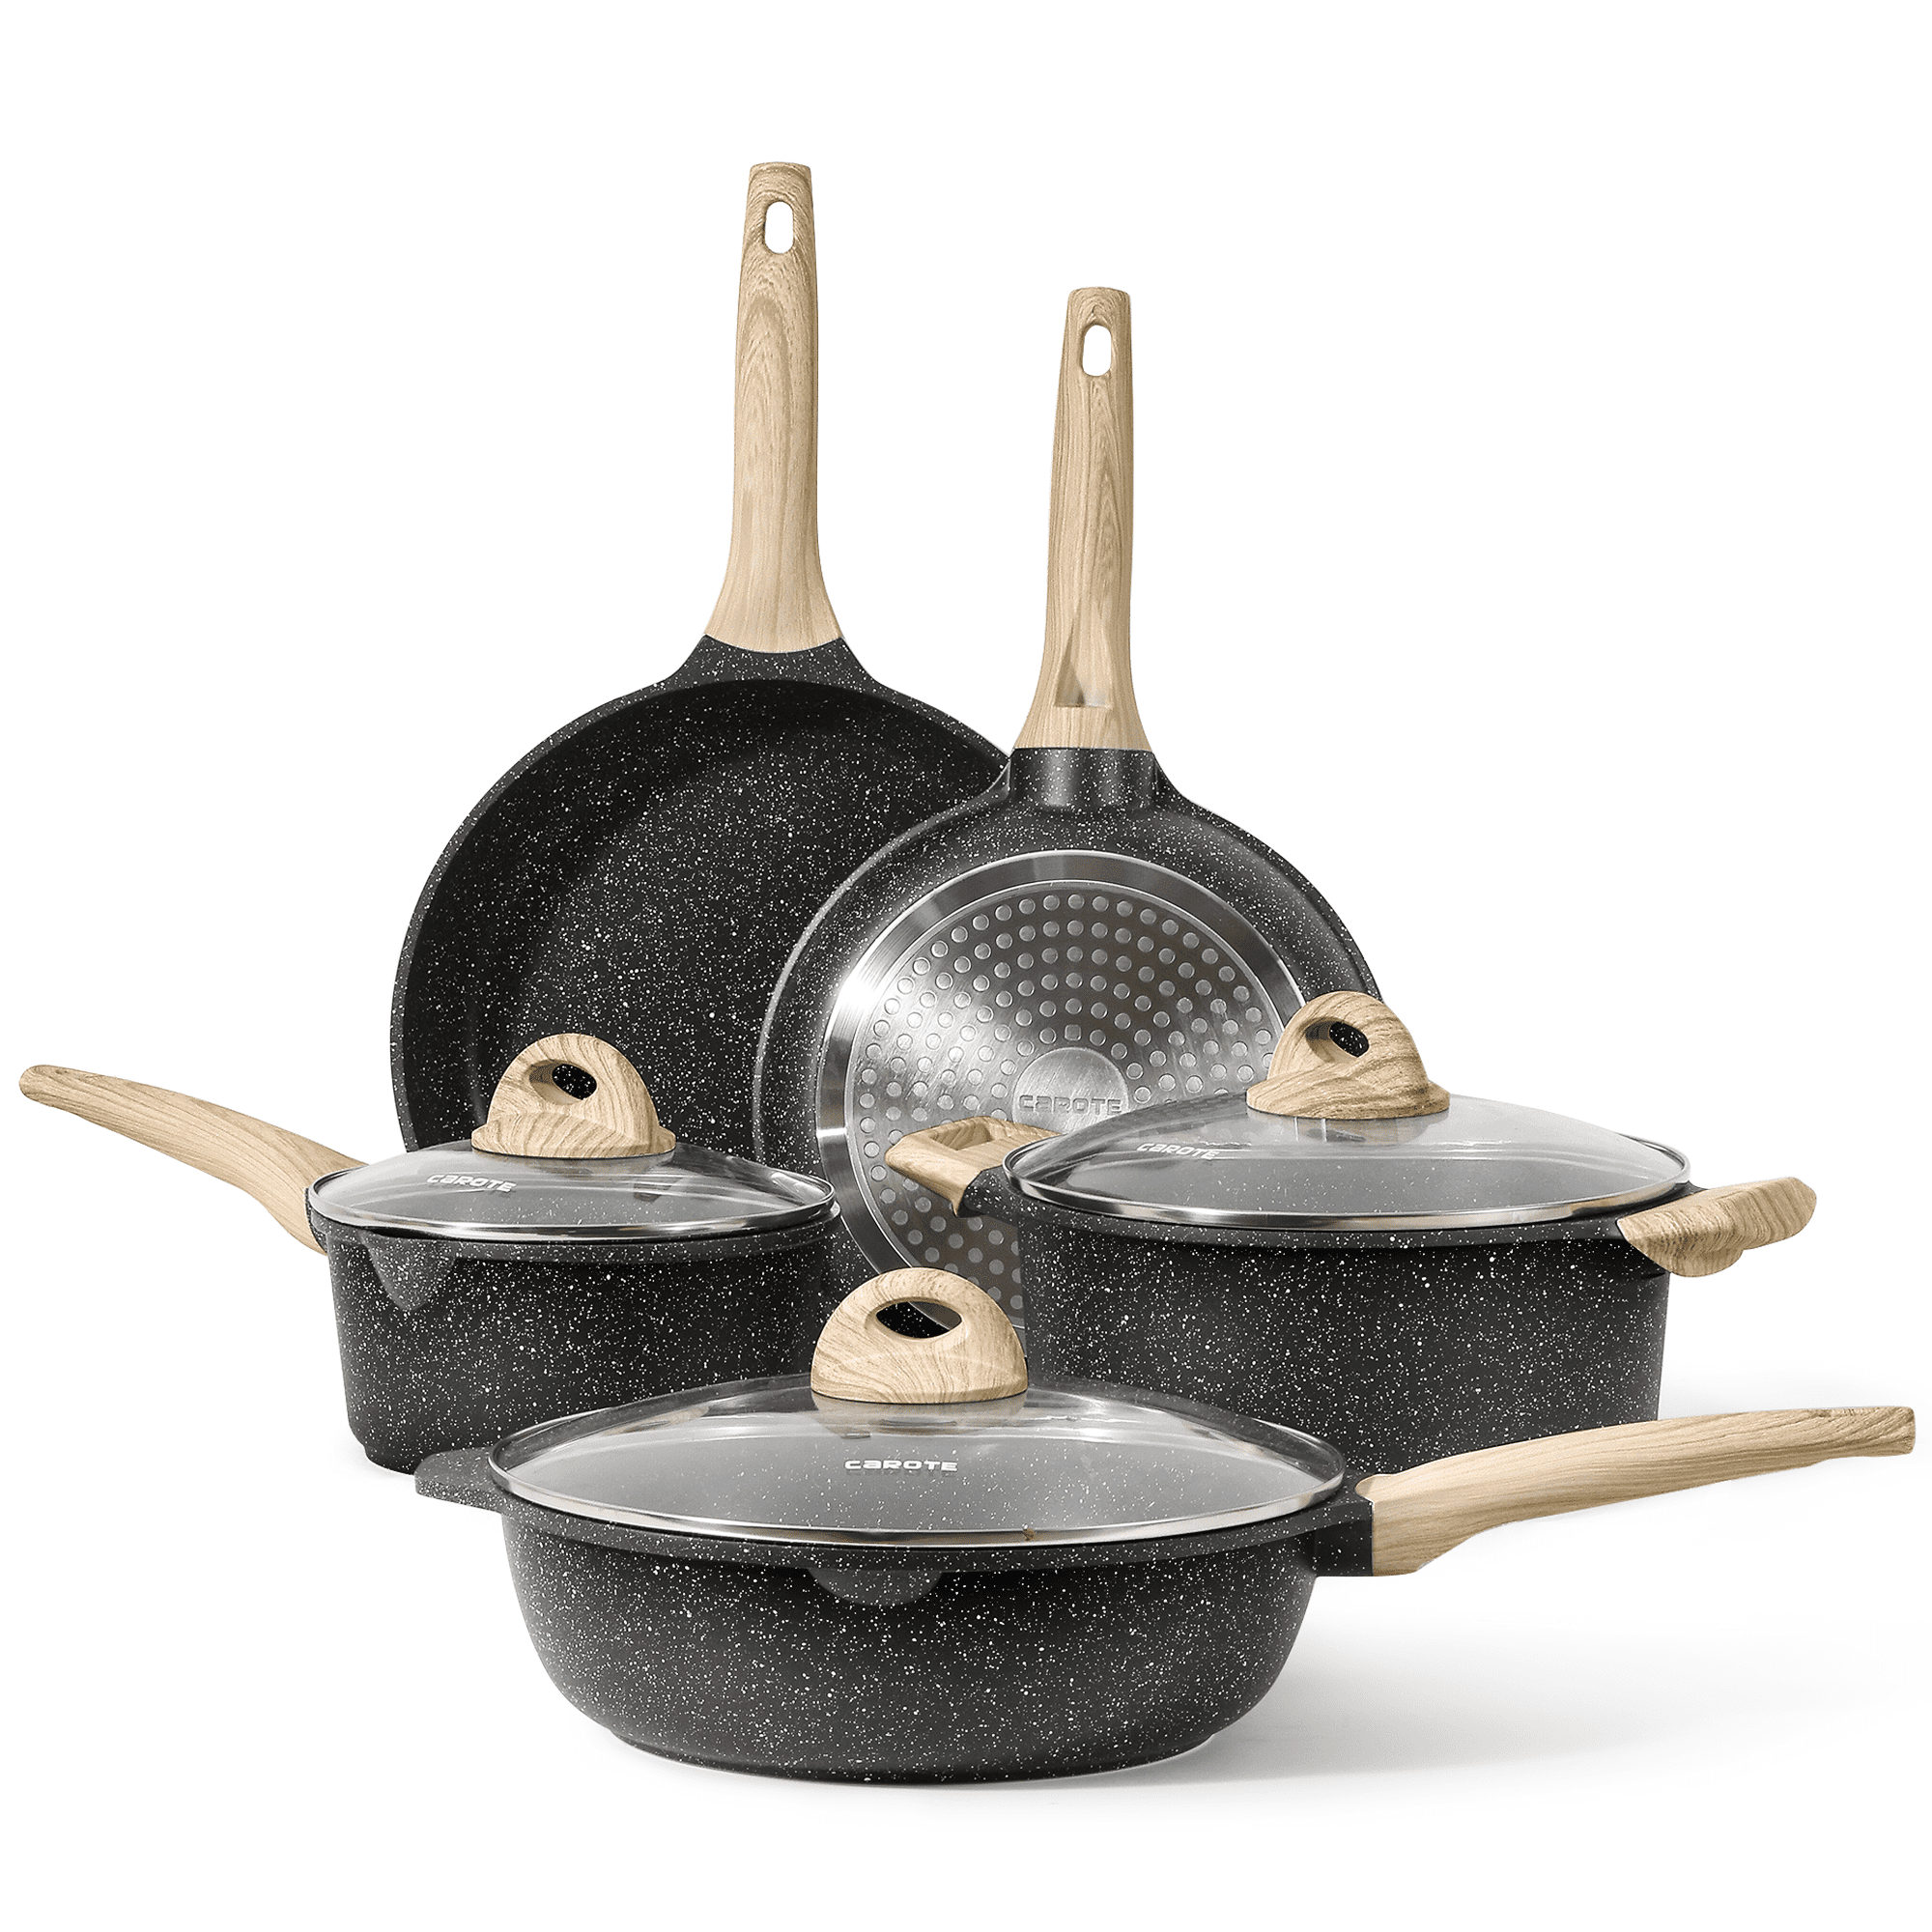 Carote Nonstick Pots and Pans Set, 8 Pcs Induction Kitchen Cookware Sets (Black) - image 1 of 7